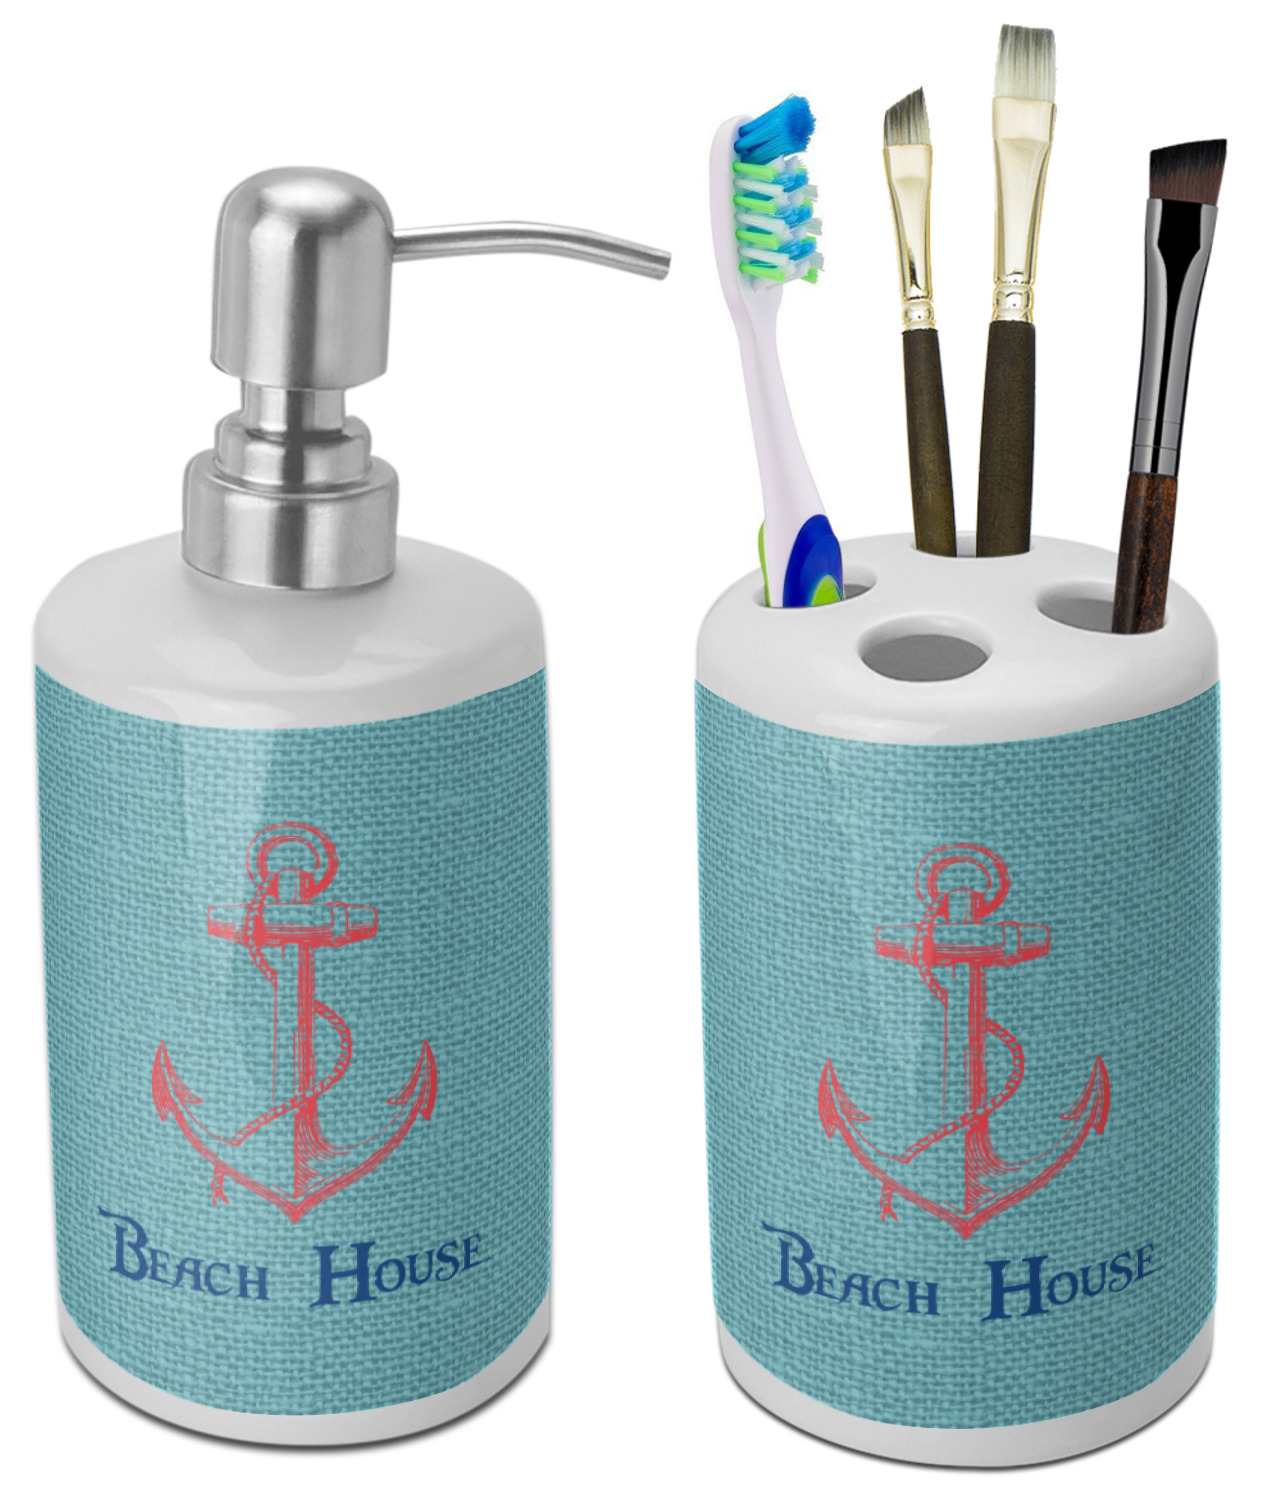 https://www.youcustomizeit.com/common/MAKE/229218/Chic-Beach-House-Ceramic-Bathroom-Accessories-4.jpg?lm=1611772634